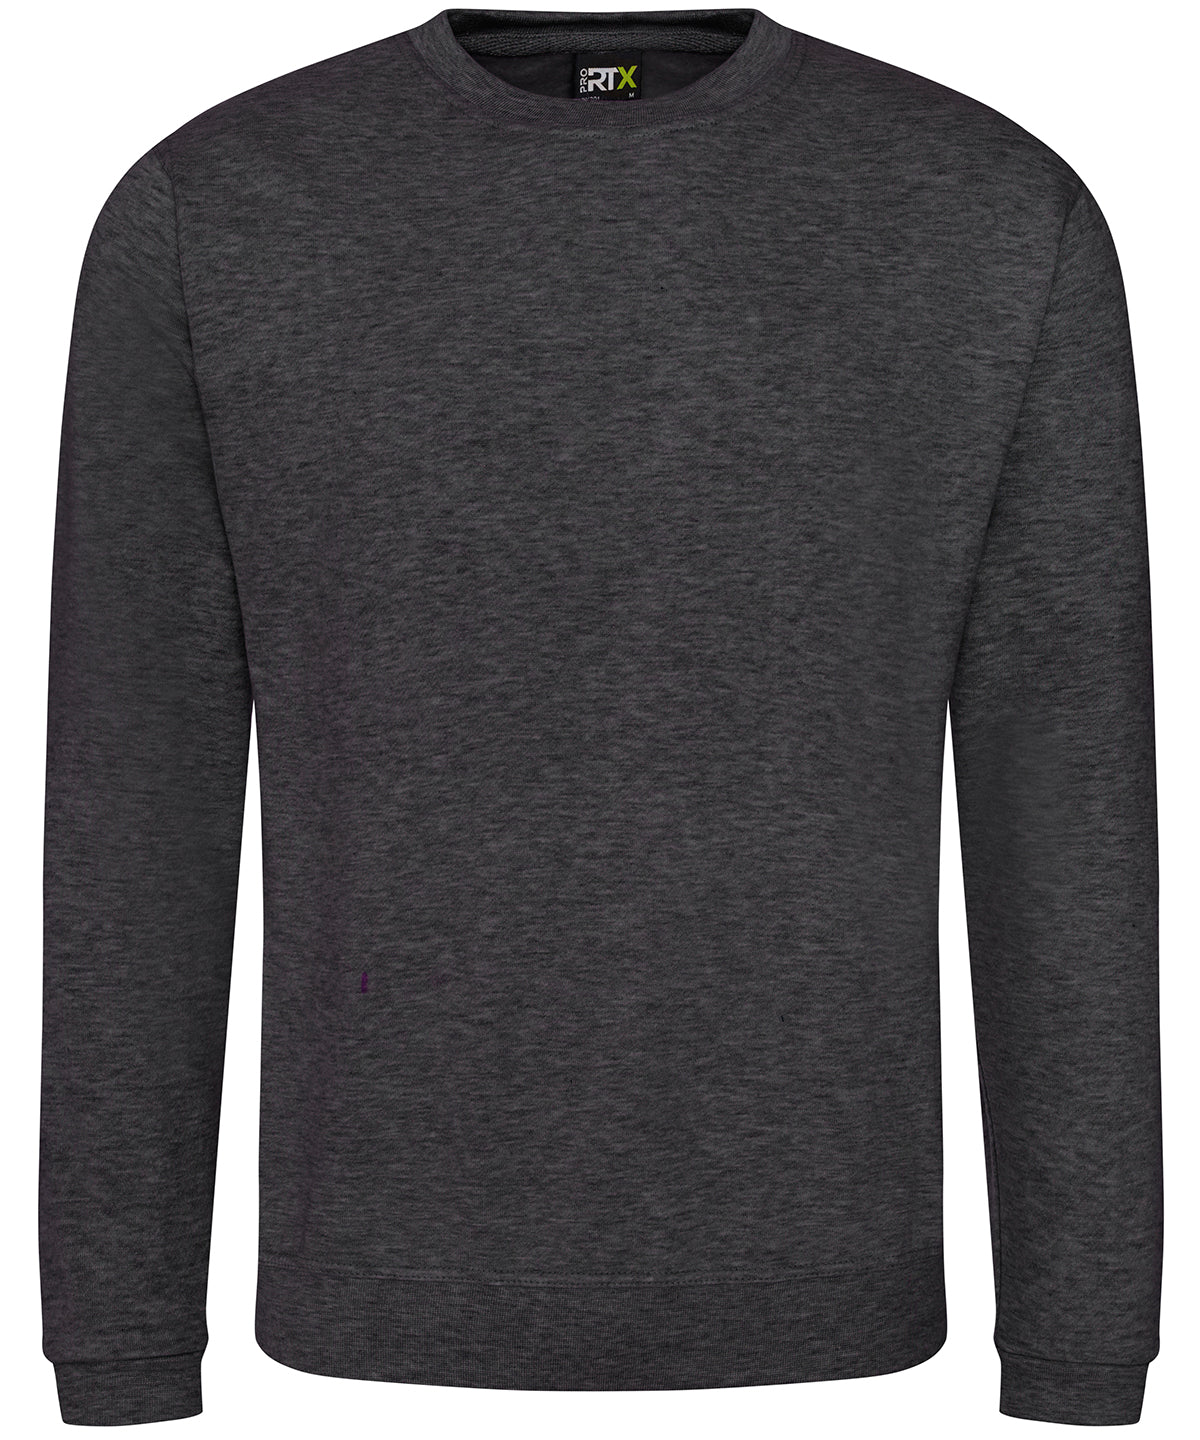 Pro sweatshirt sizes 2XL-7XL